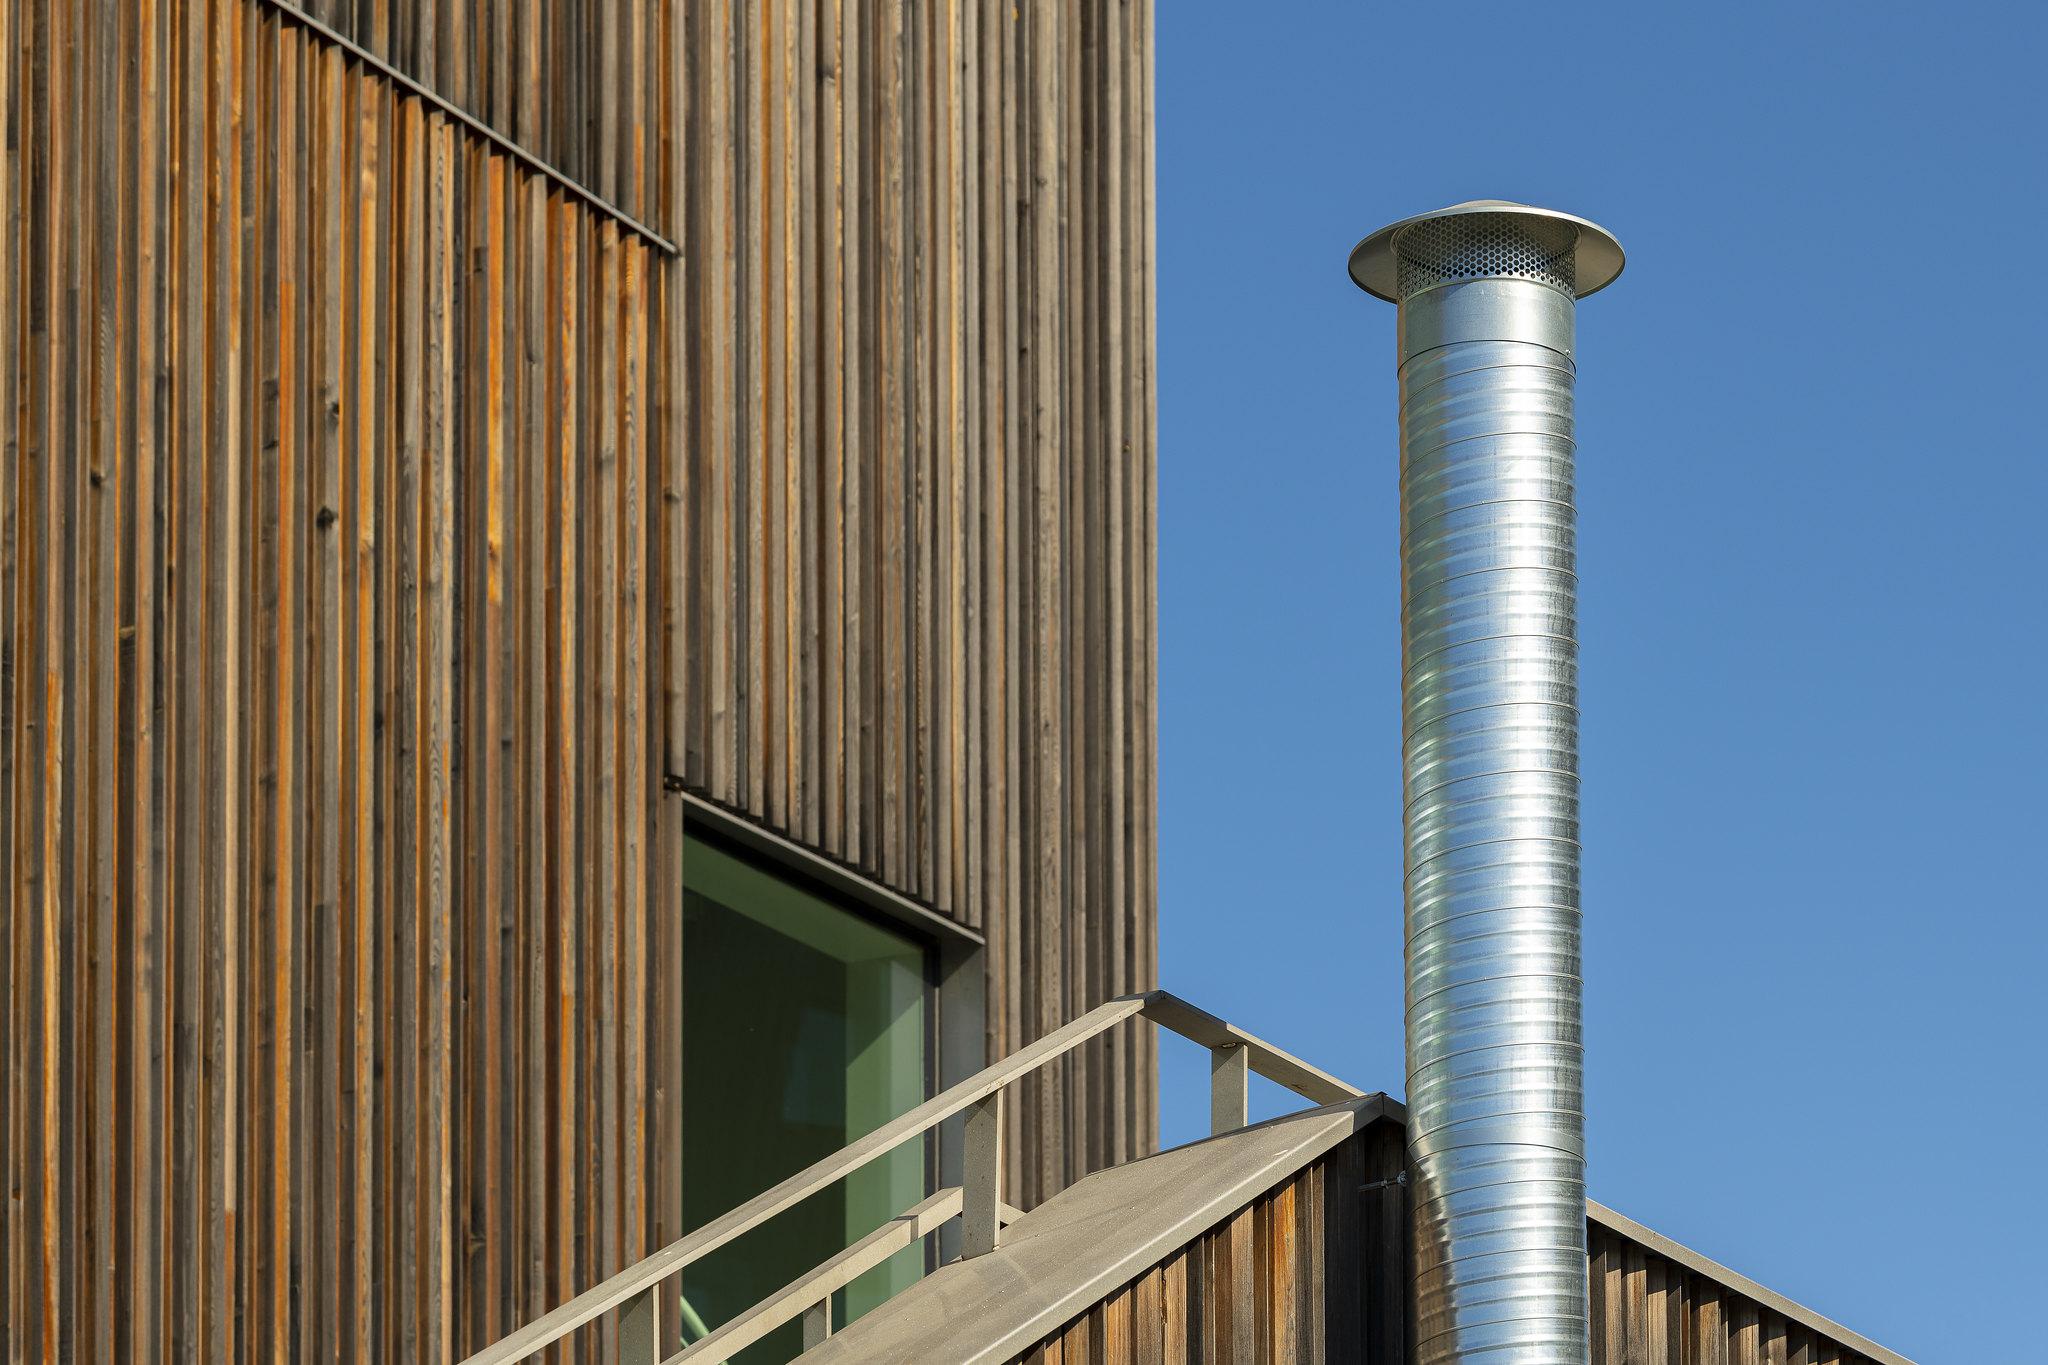 Nancy Holt's Ventilation System made of steel duct presented at Bildmuseet in Sweden